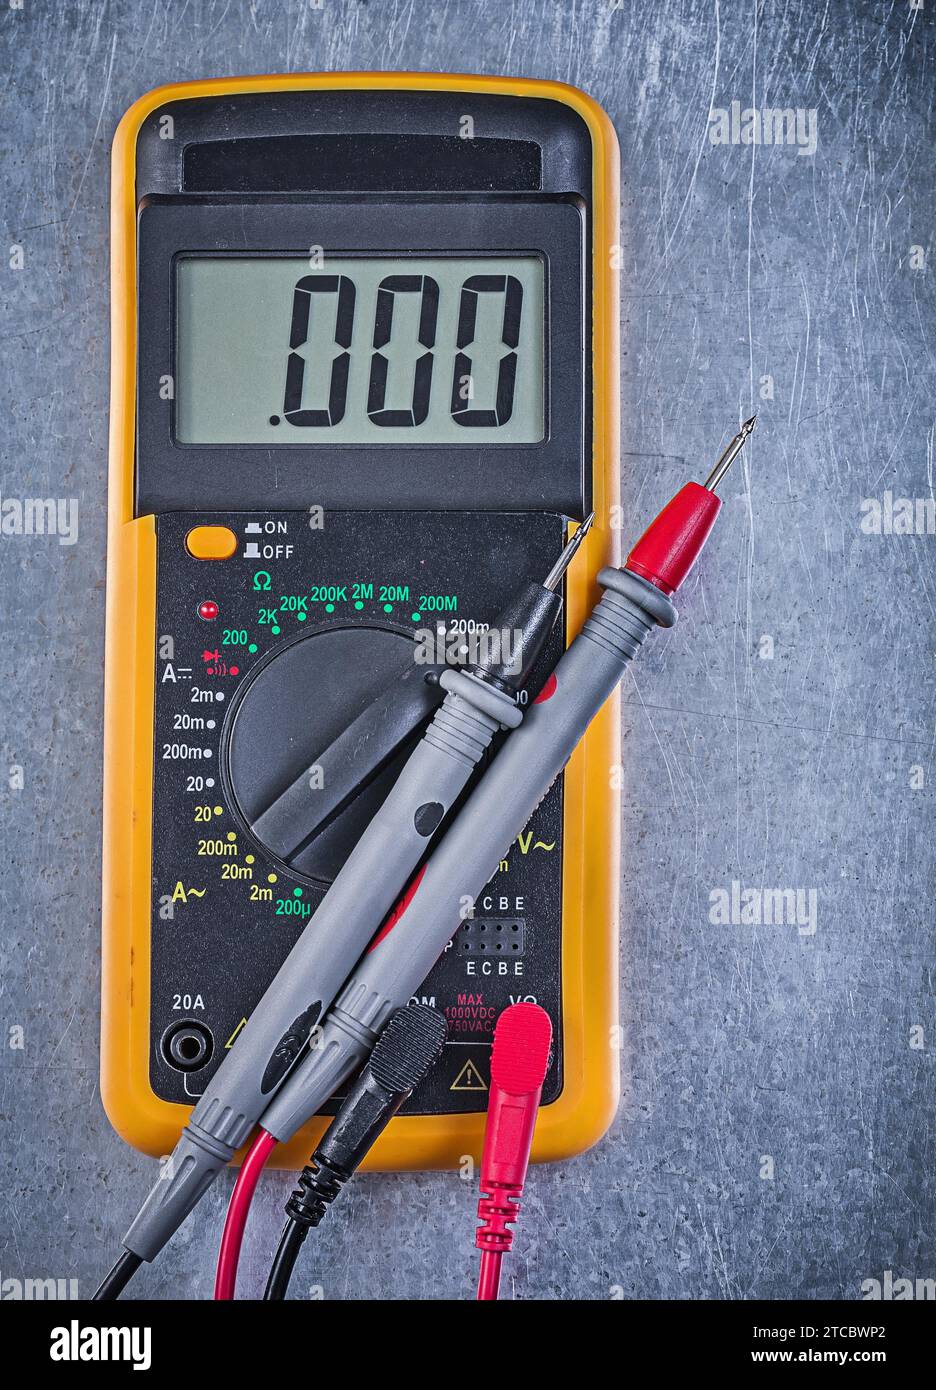 24 pc. Electronic Master Tool Kit - Model: EMK 3 - Soldering Iron,  Screwdrivers, Pliers, Voltage Tester, Multimeter, & More